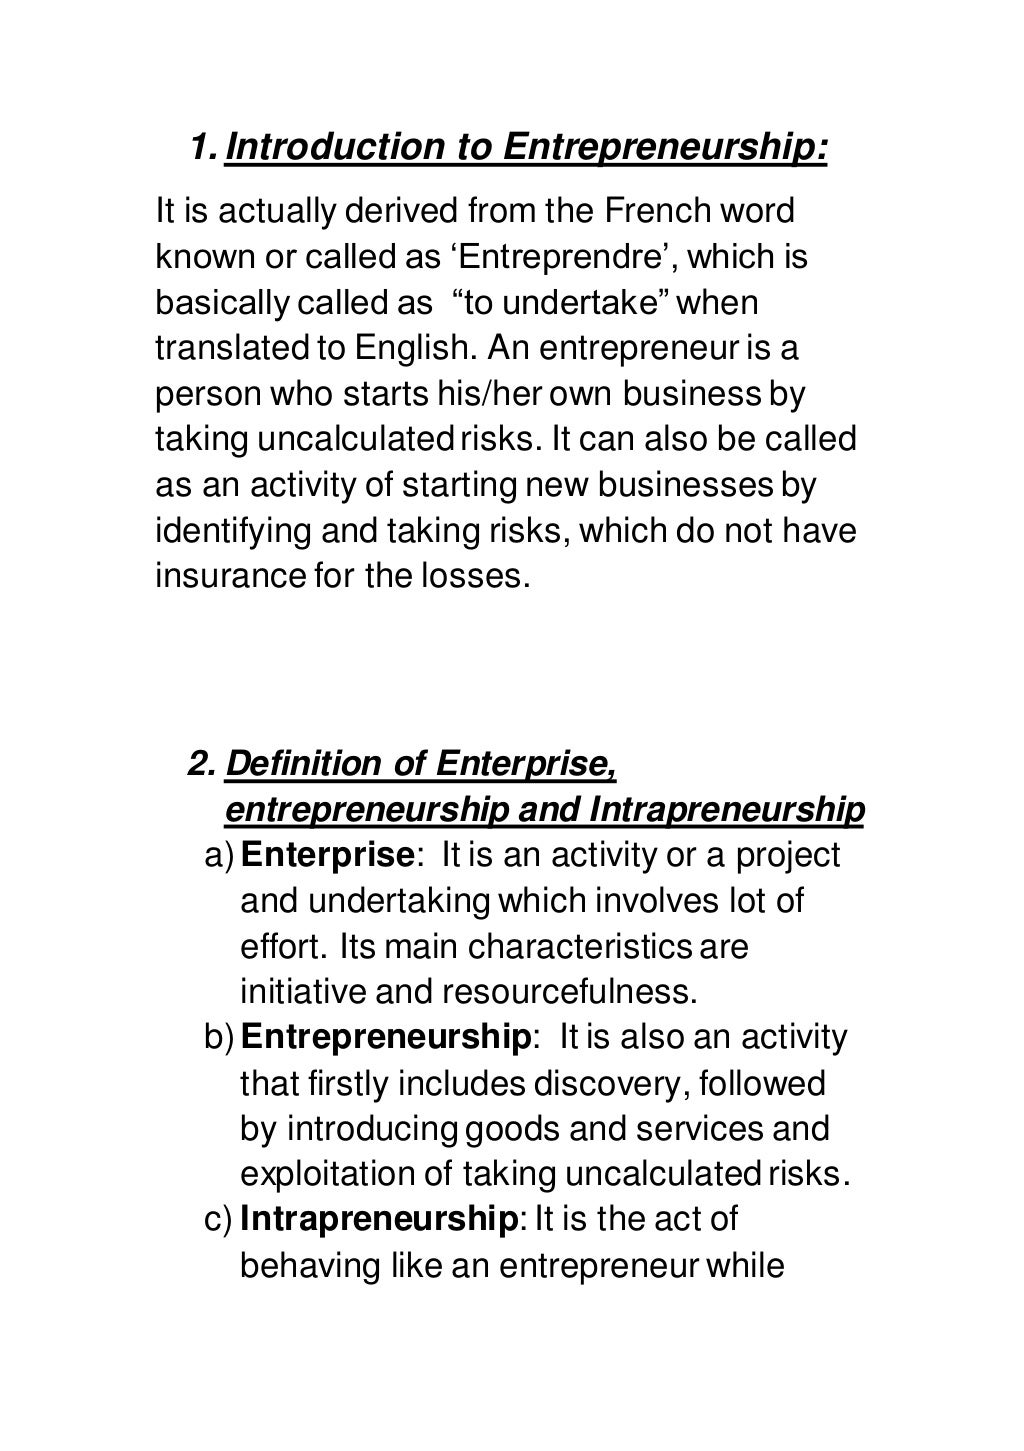 contoh assignment entrepreneurship